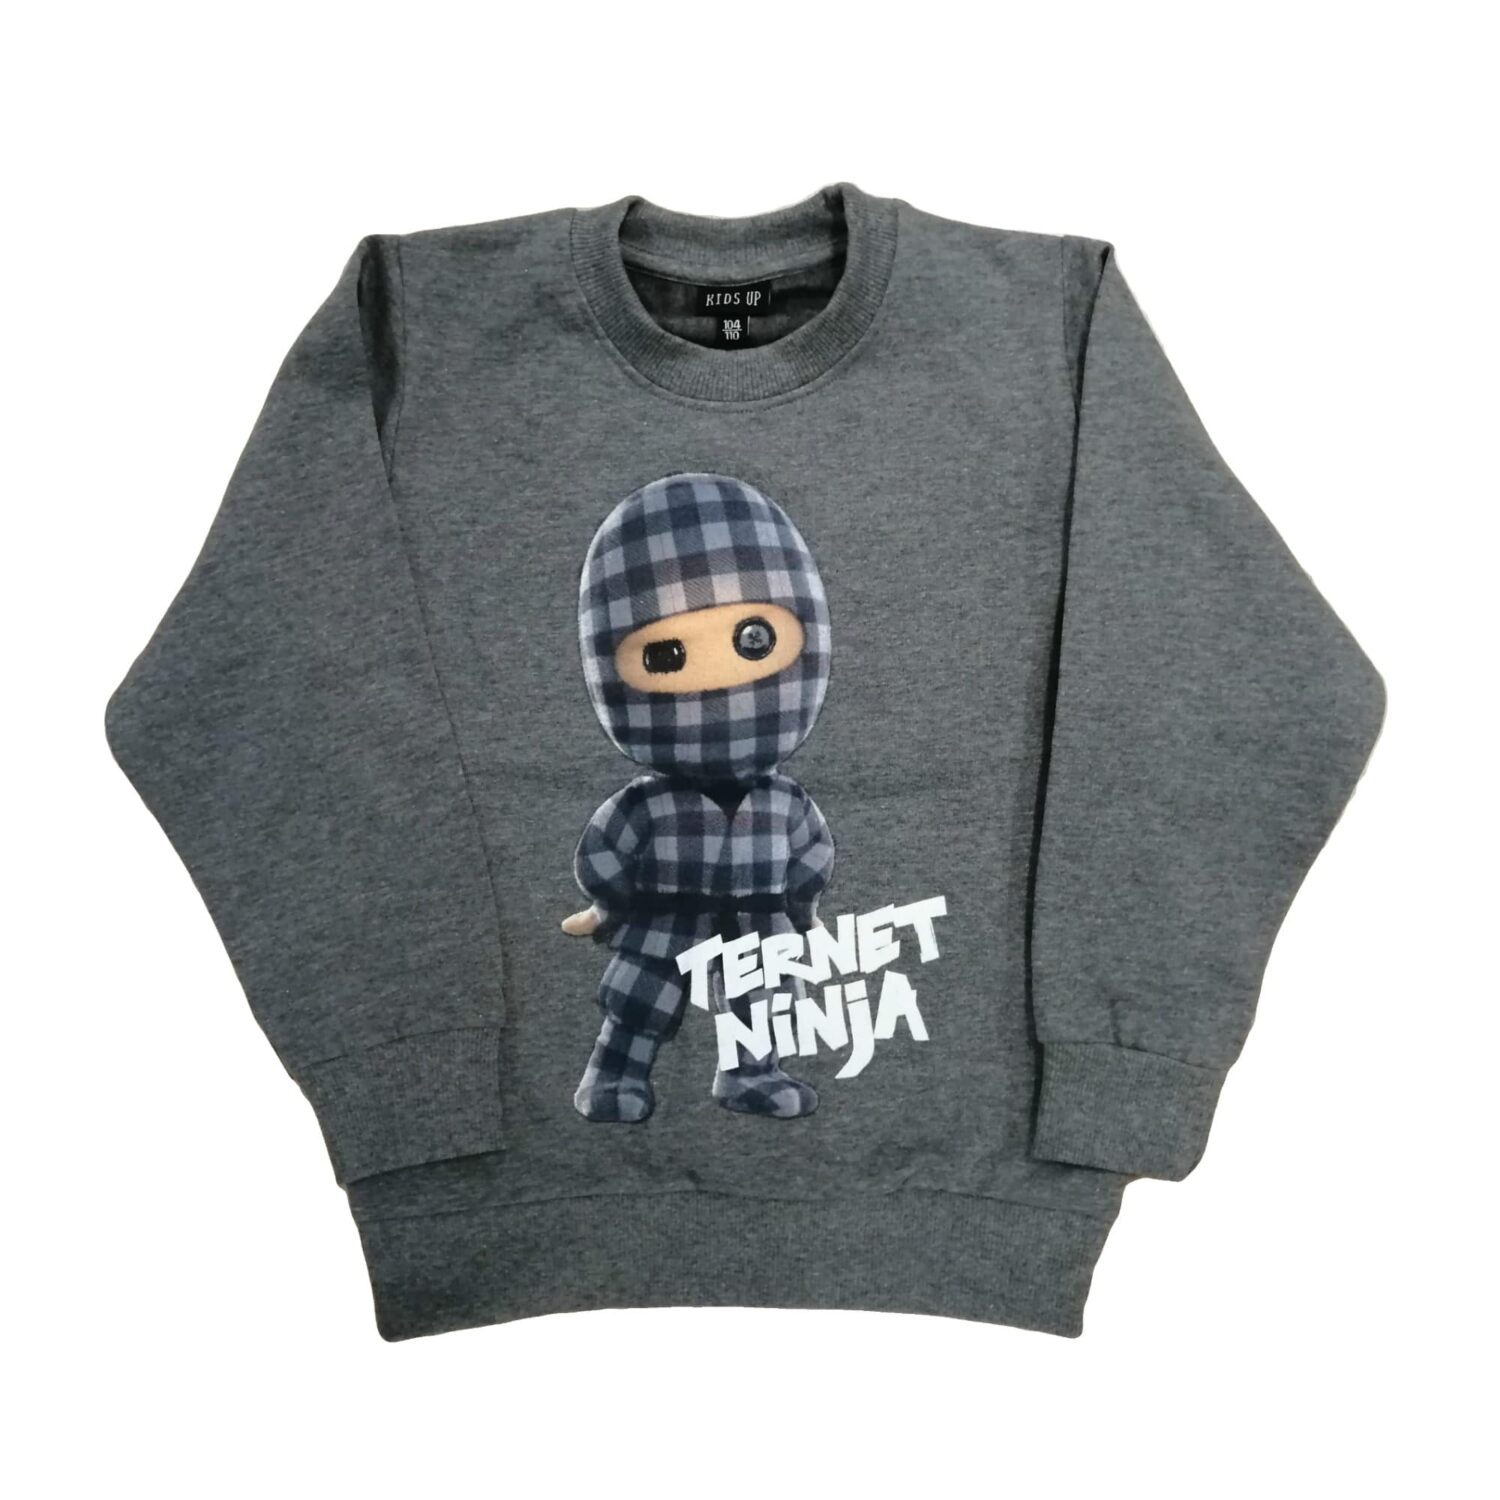 Kids Up Ternet Ninja Sweatshirt Grey